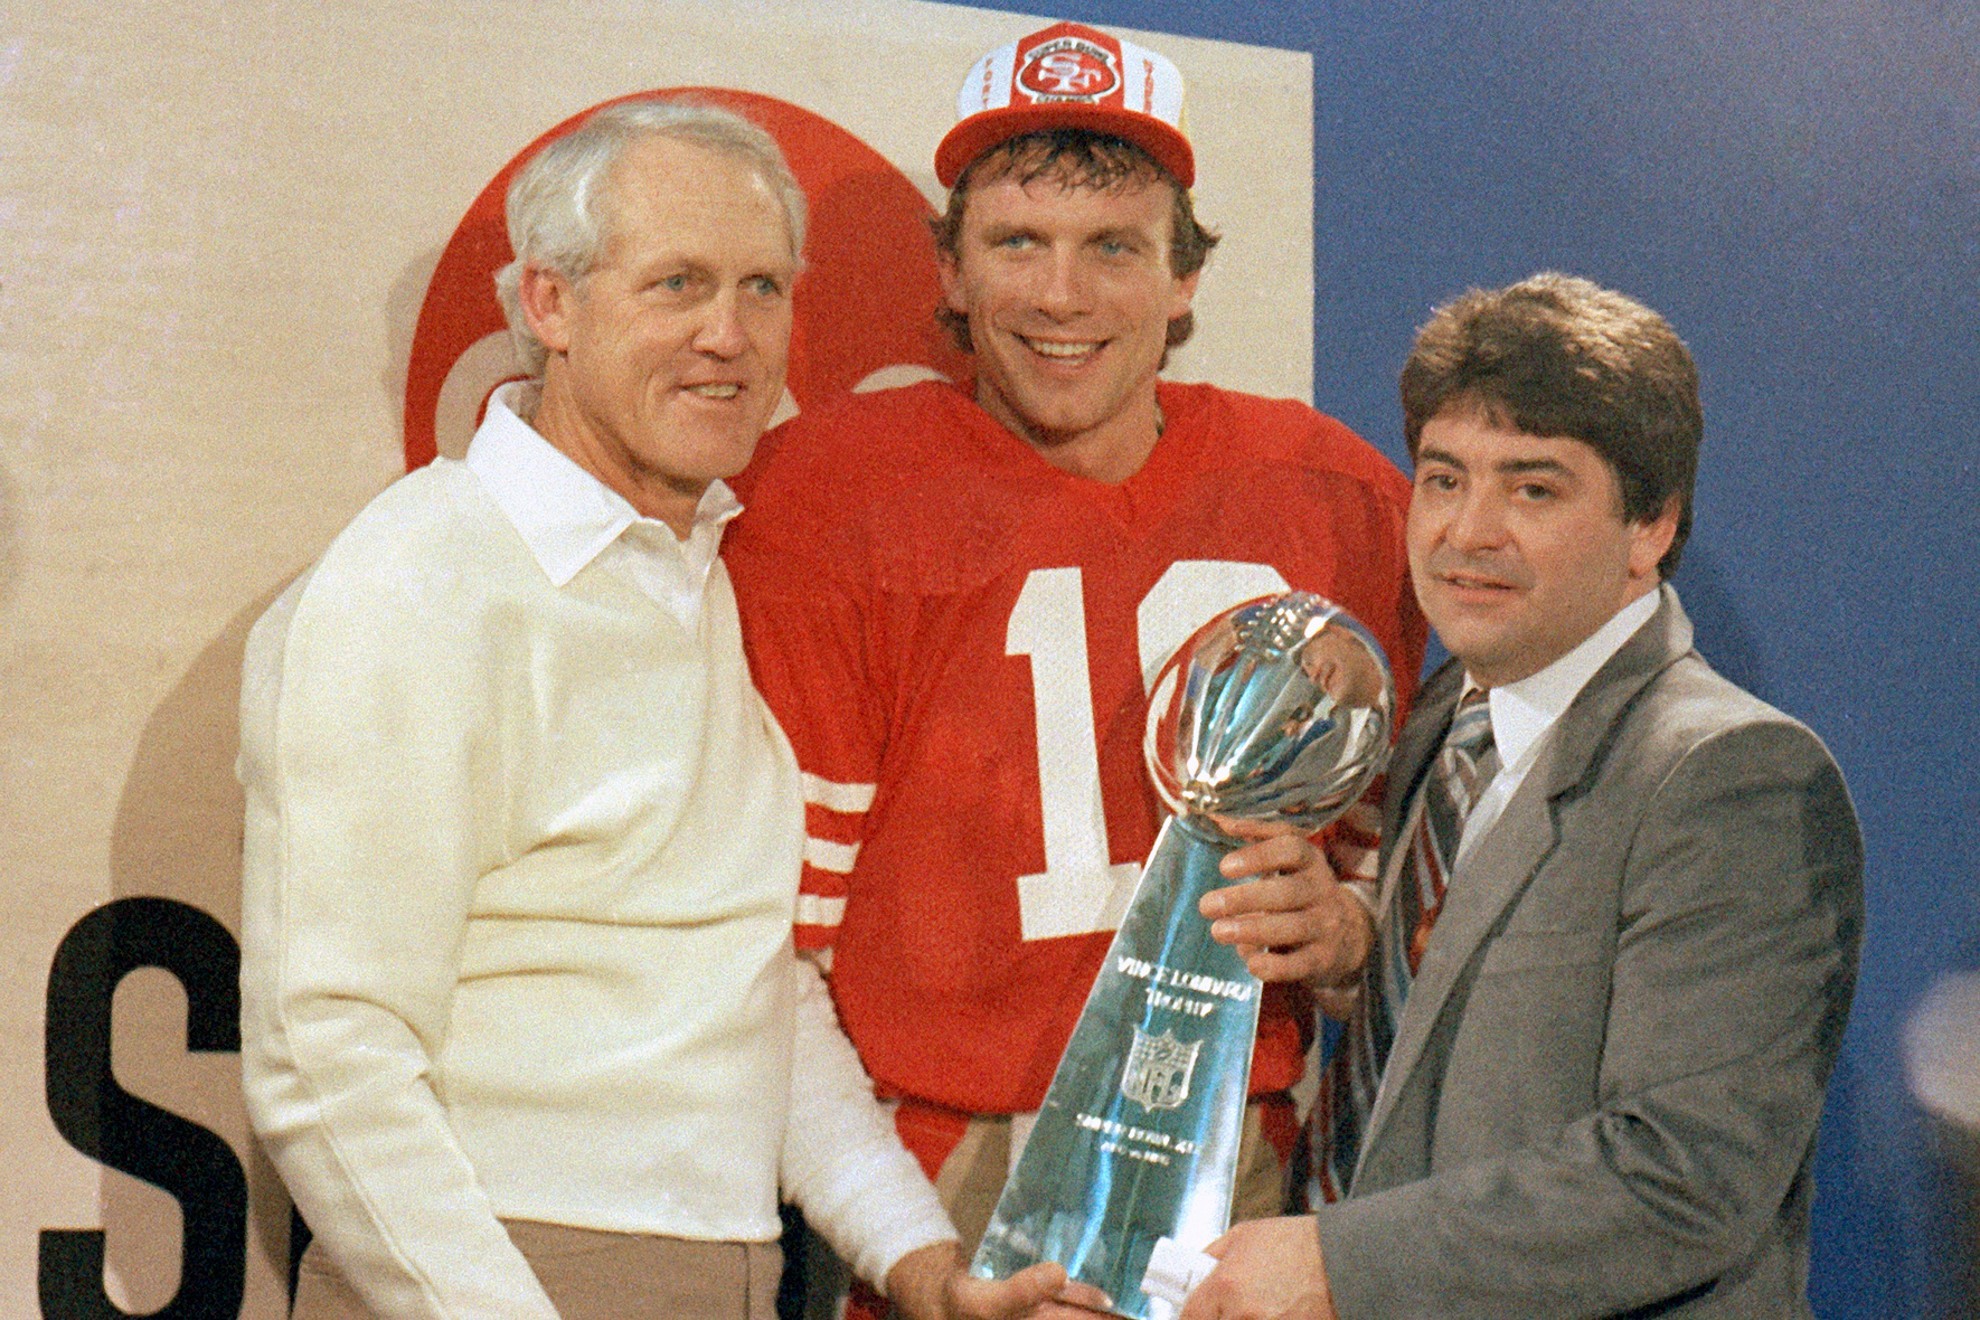 49ers Super Bowl: Cuntas veces ha participado el equipo de San Francisco en el Super Bowl?